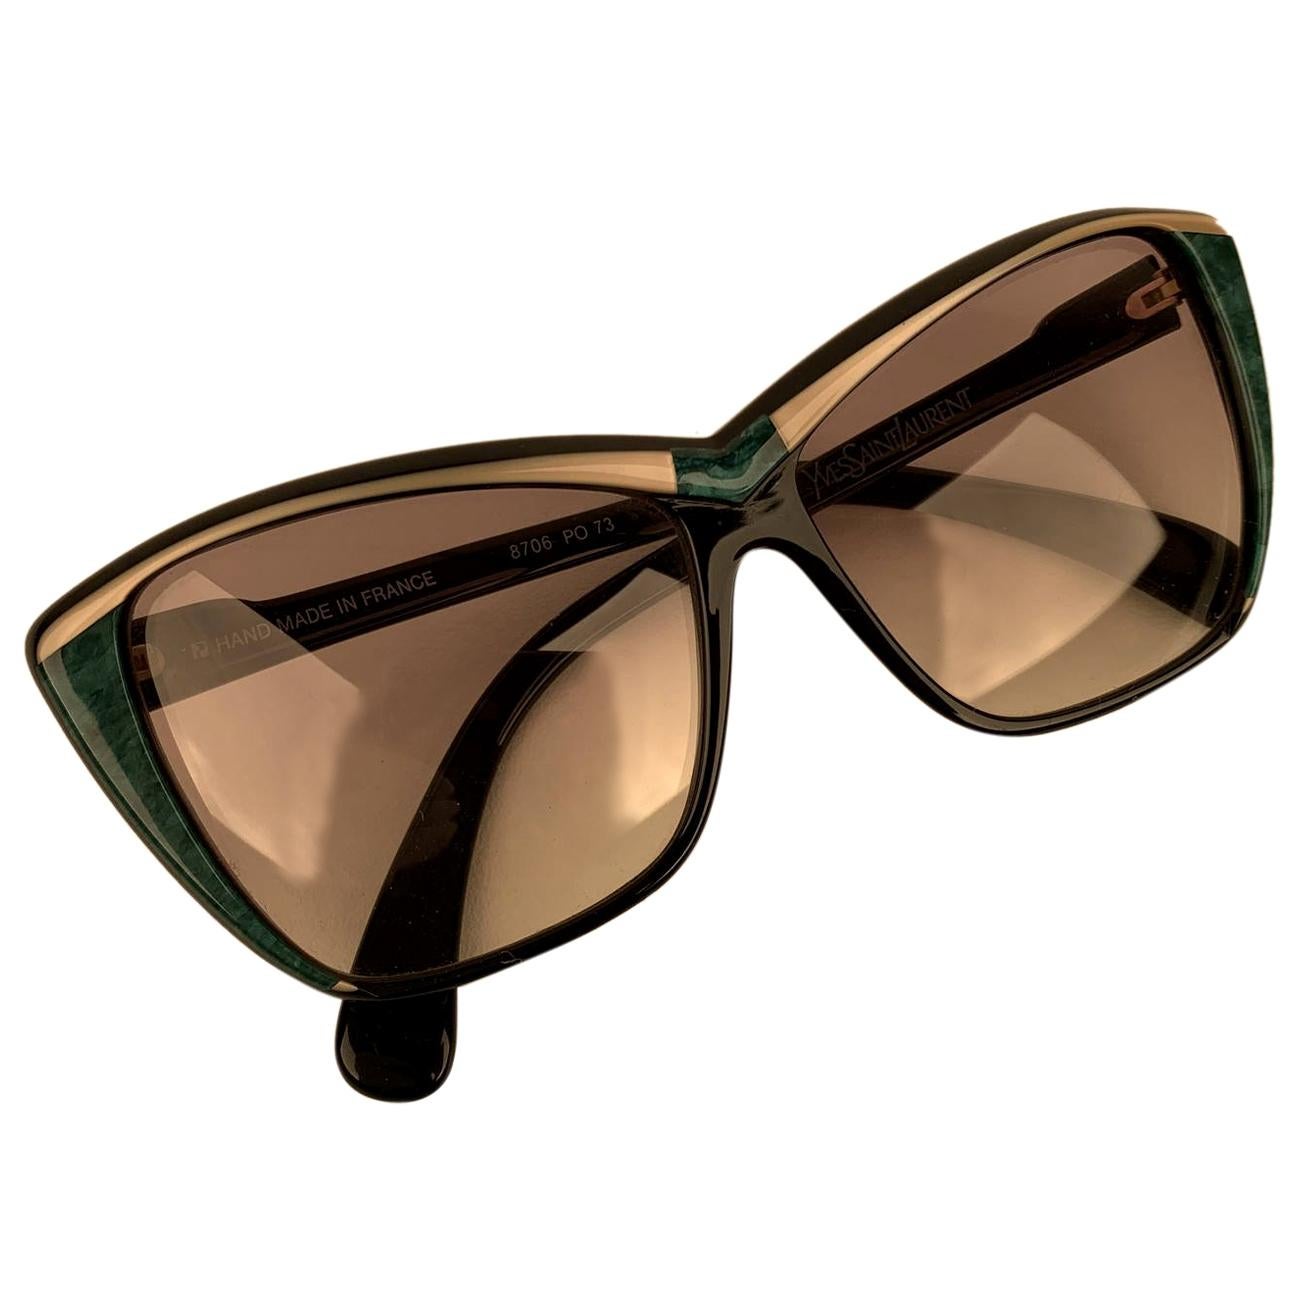 Yves Saint Laurent Vintage Black Green Sunglasses 8706 PO 73